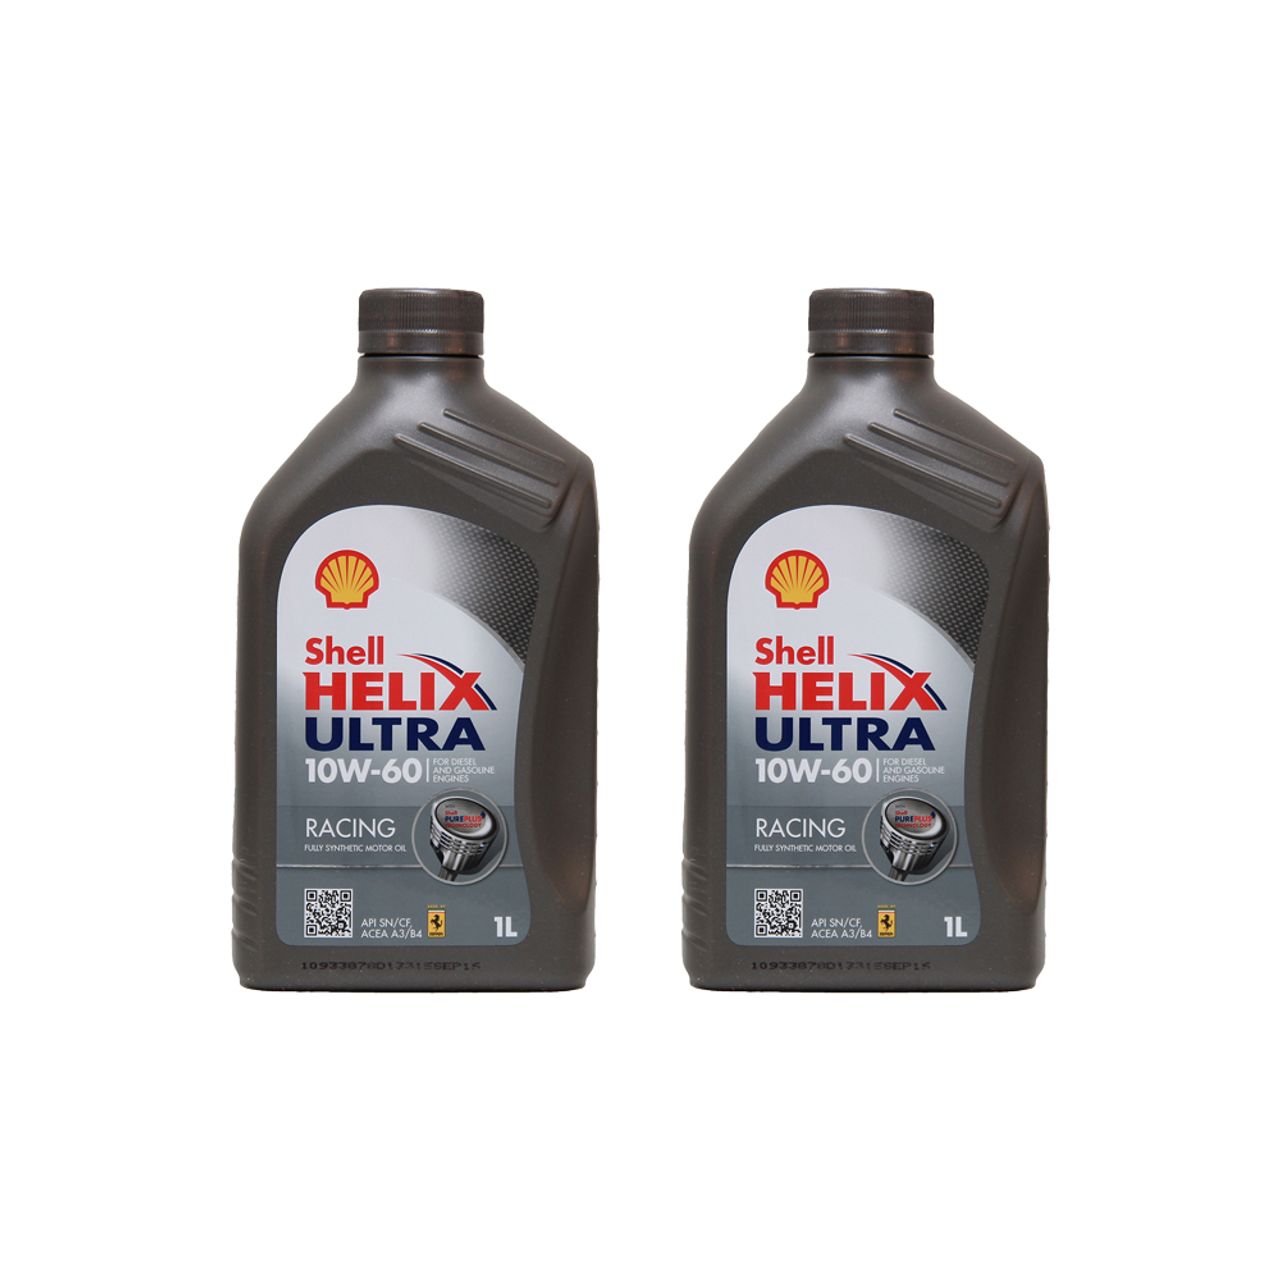 Shell Helix Ultra Racing 10W-60 2x1 Liter